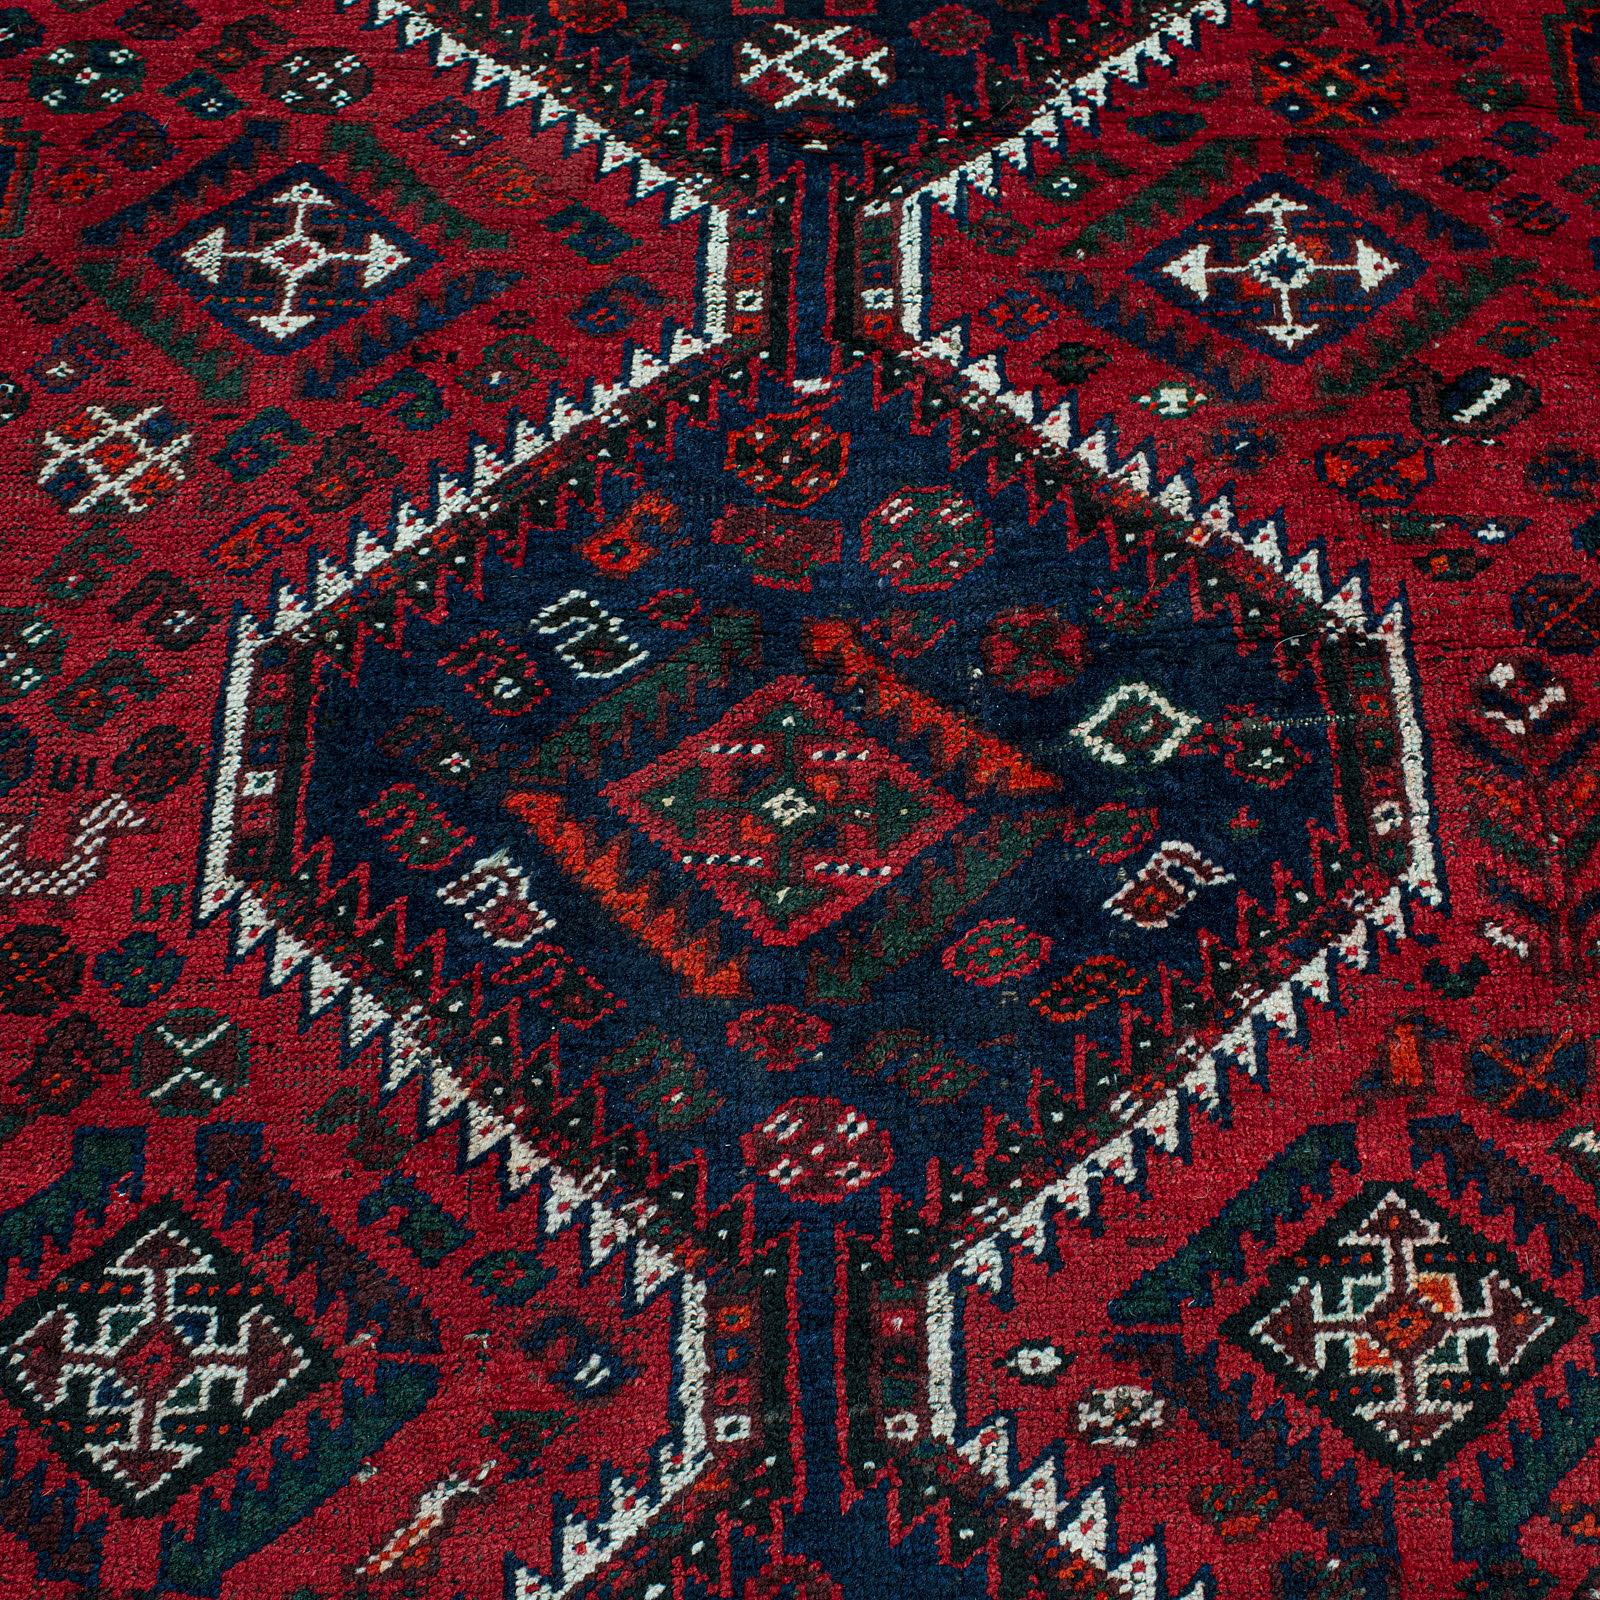 Antique Turkoman Carpet, Caucasian, Hand Woven, Lounge, Hallway, Rug, Circa 1900 For Sale 4